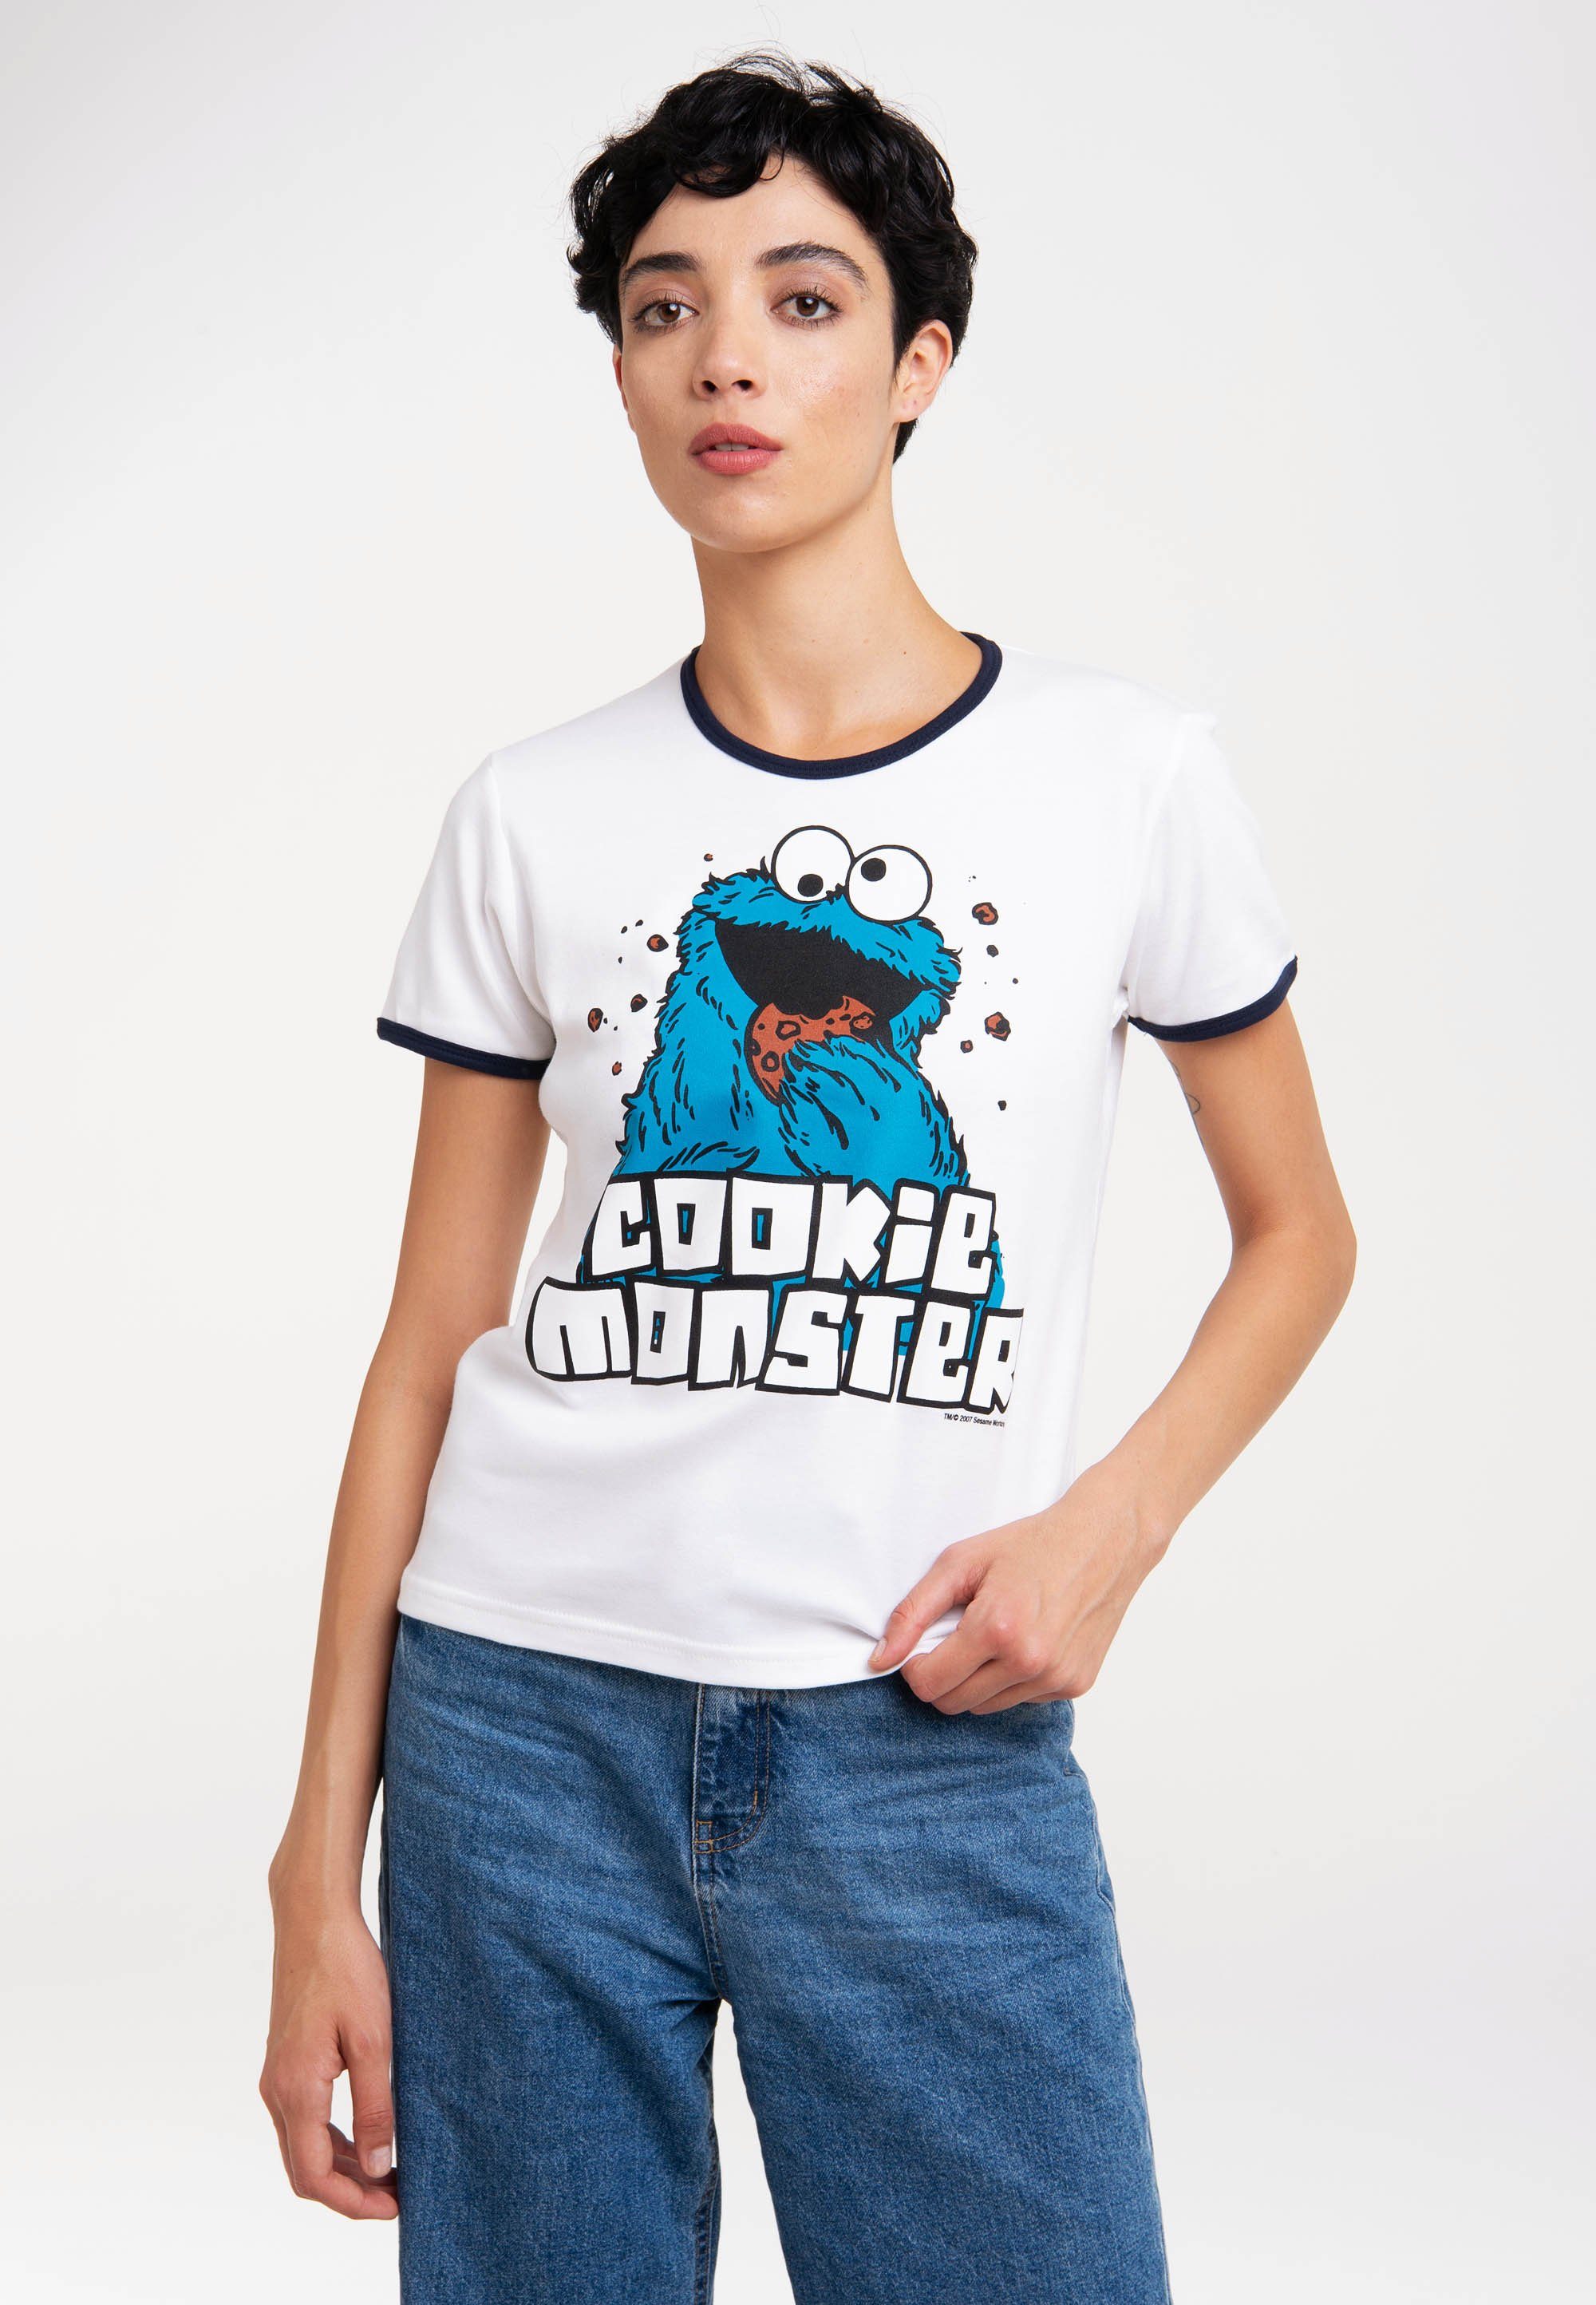 LOGOSHIRT T-Shirt Sesamstrasse - mit Krümelmonster dunkelblau weiß, lizenziertem Print